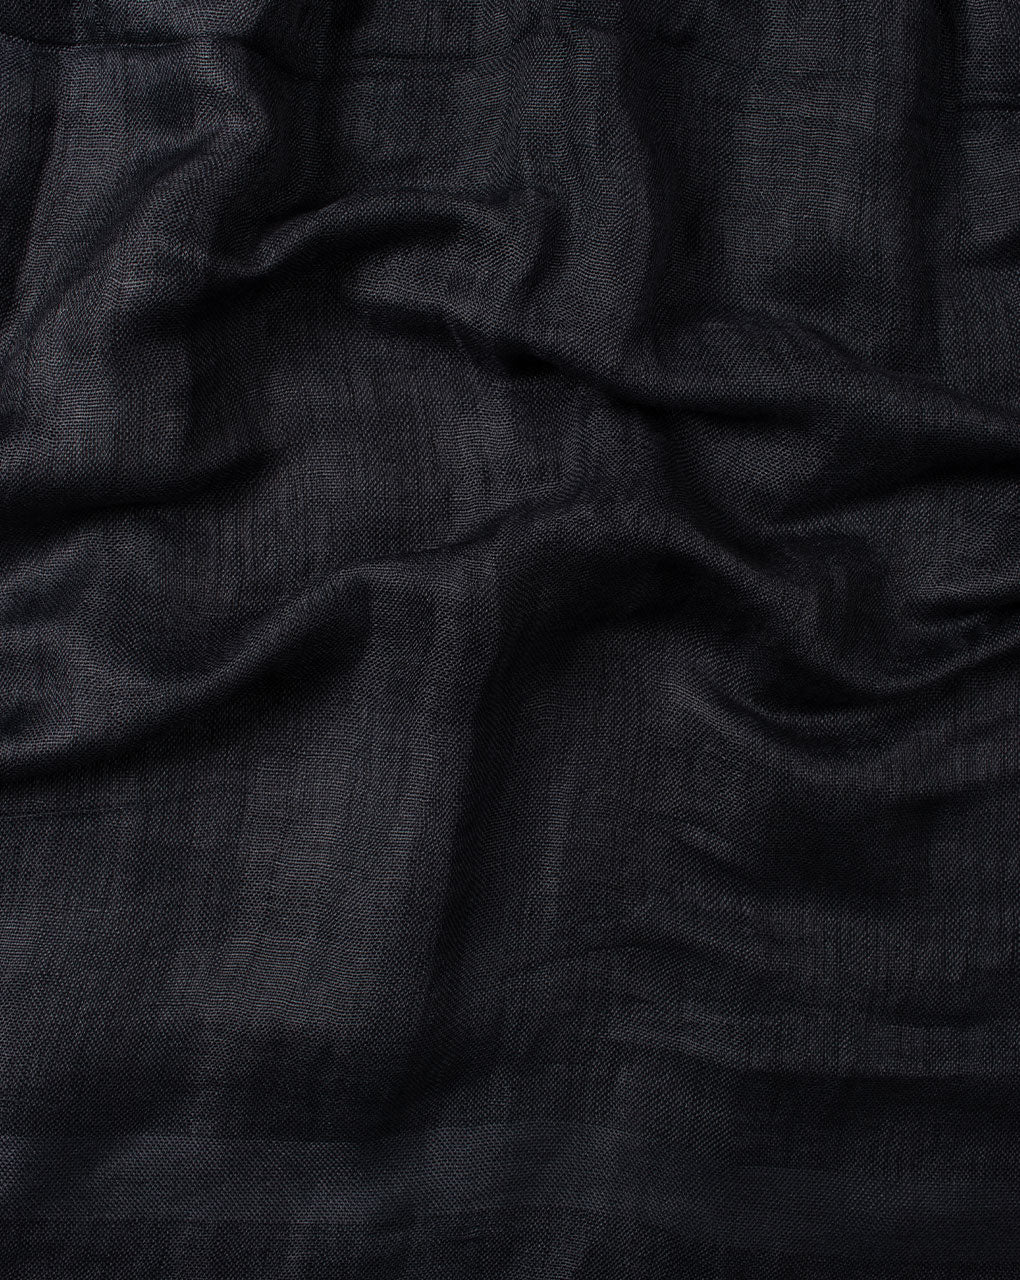 Grey Plain Woven Bhagalpuri Viscose Stole - Fabriclore.com